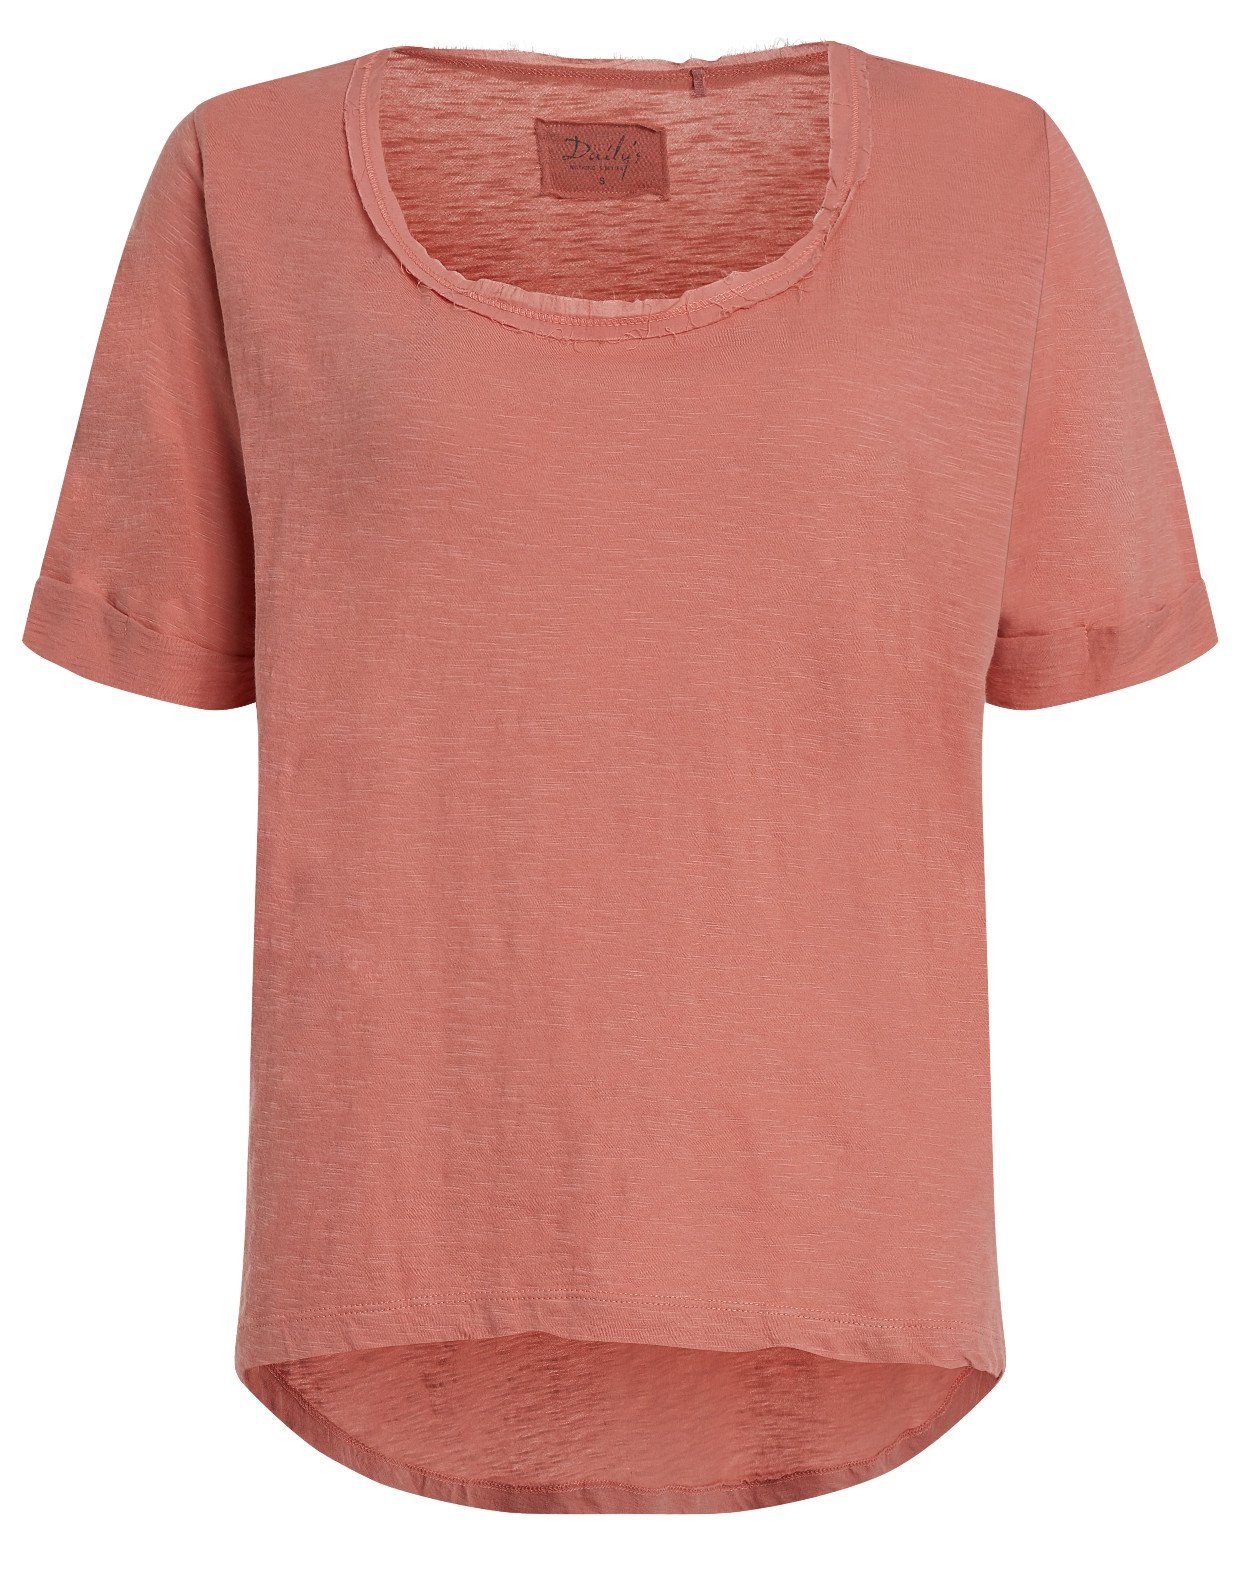 DAILY´S T-Shirt GLADIS: Damen T-Shirt mit Rundhalsausschnitt Backsteinfarben